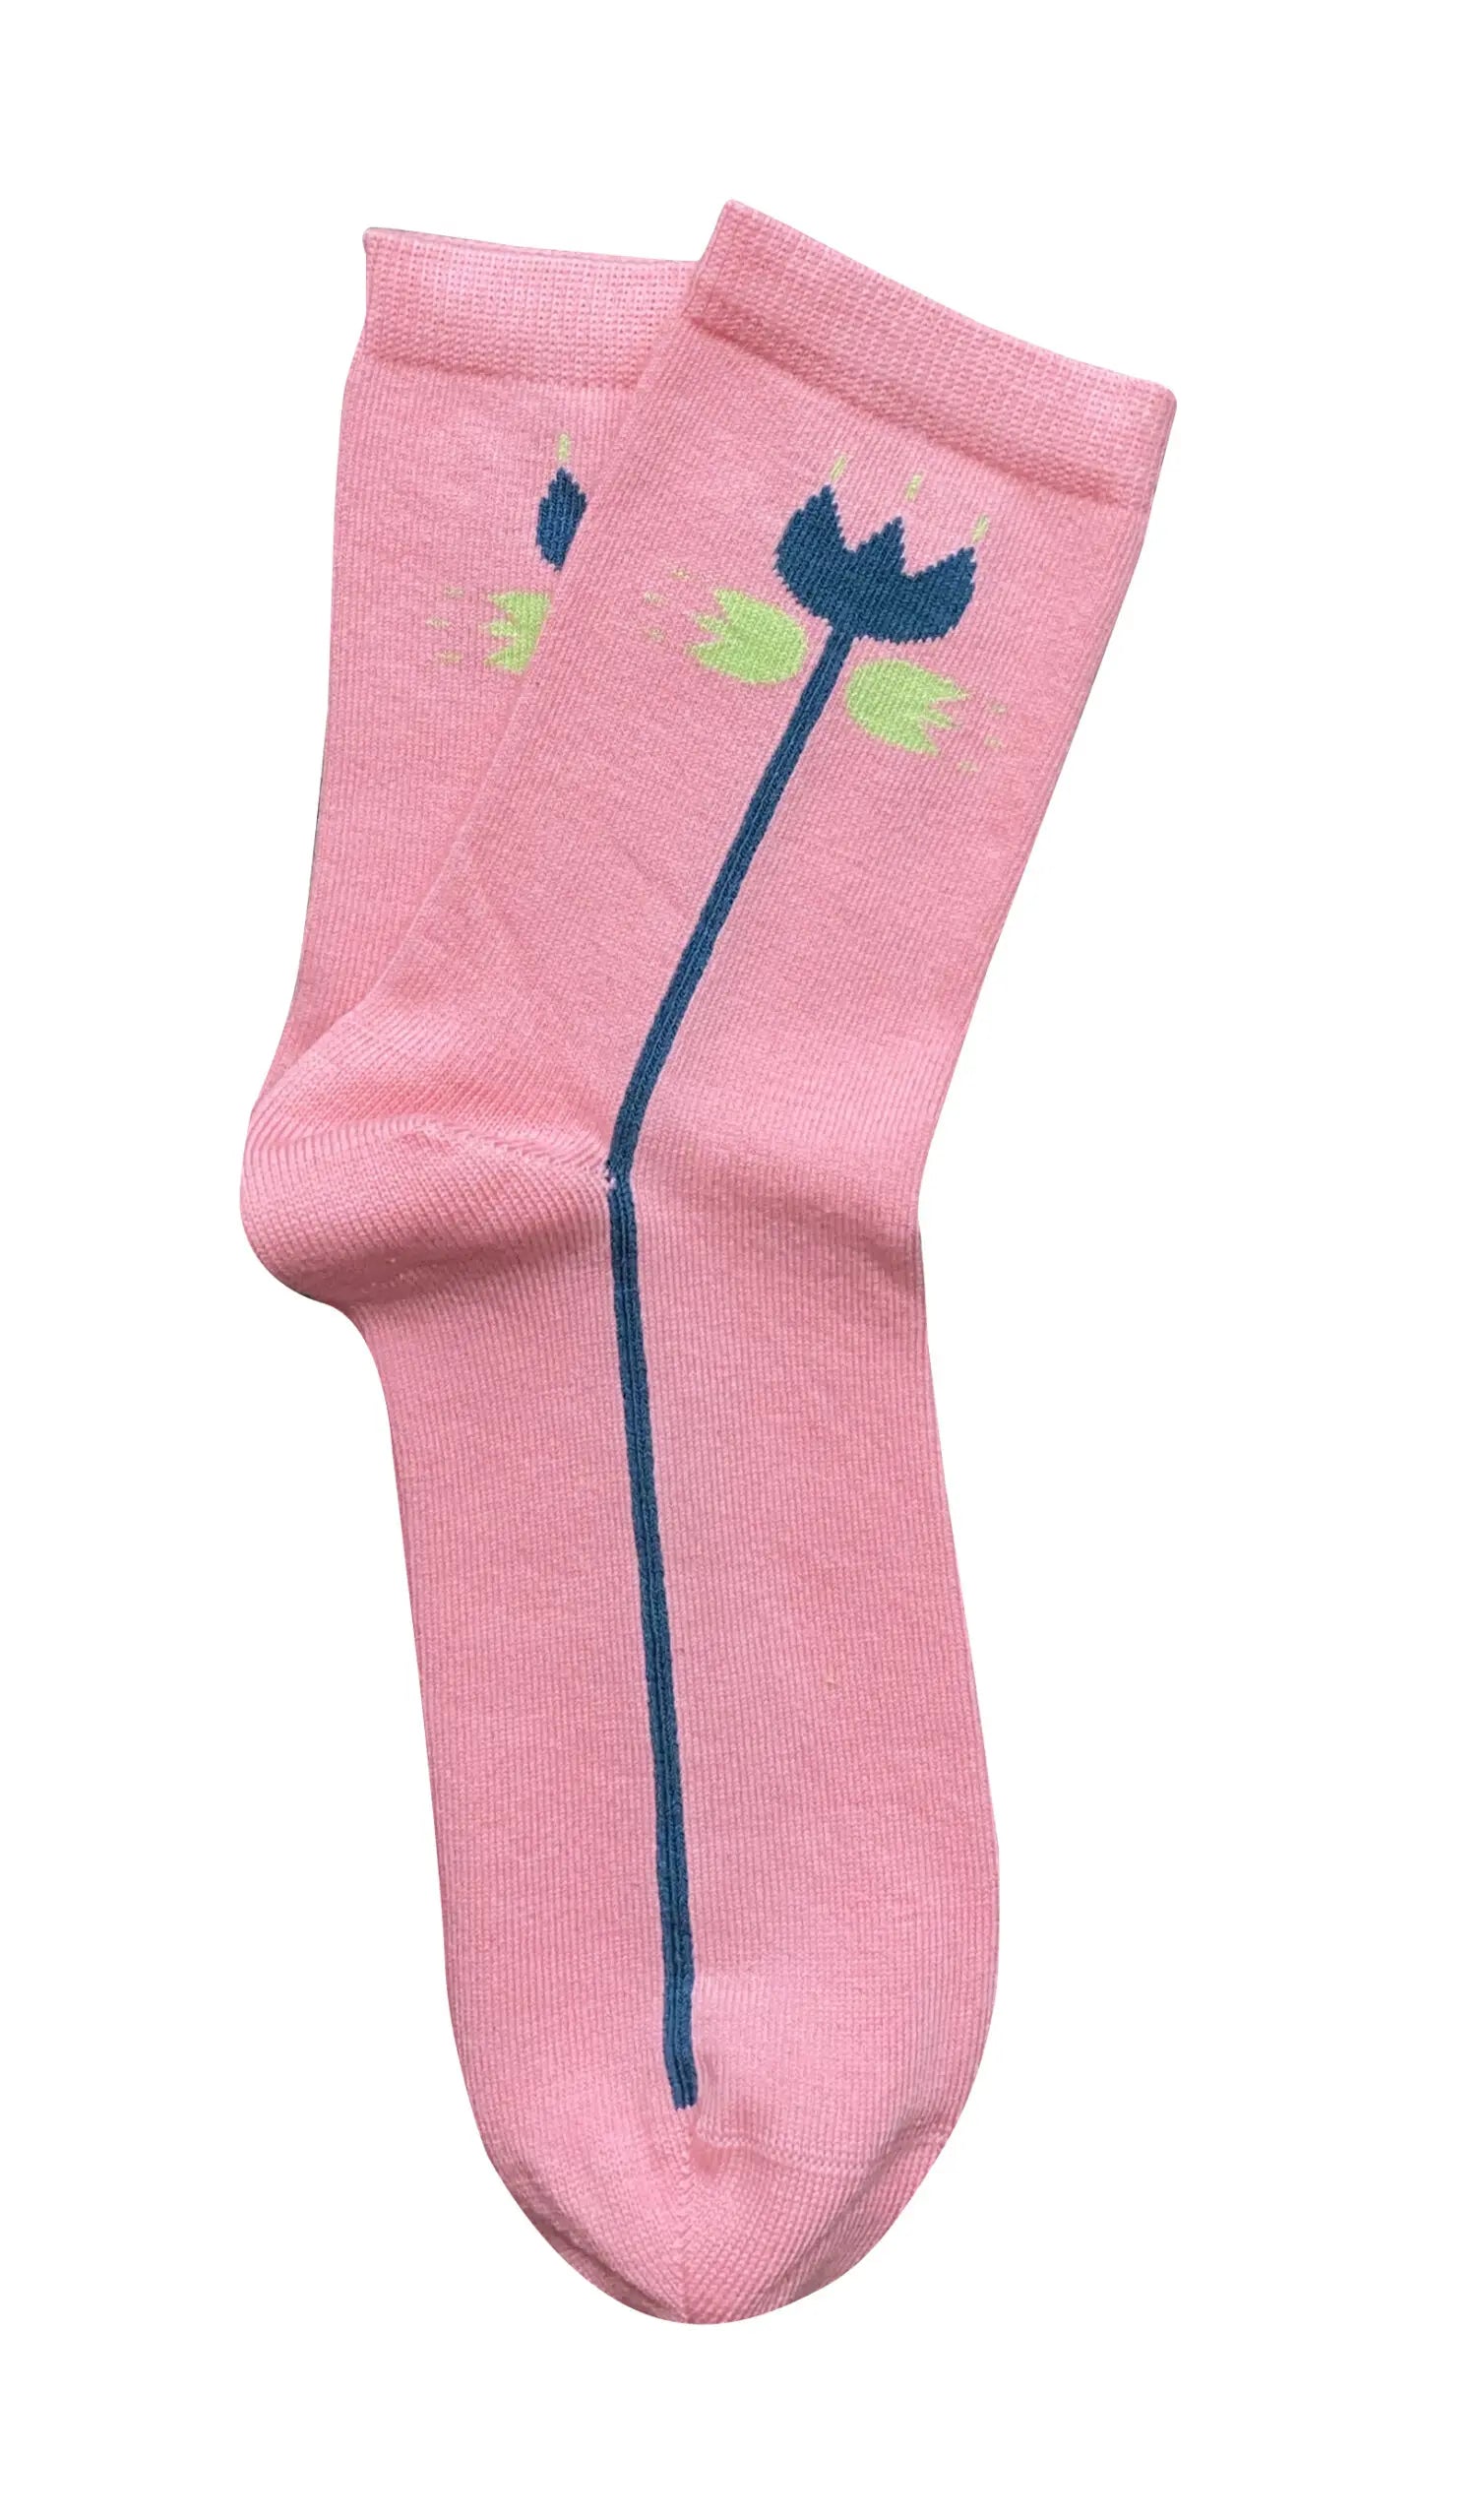 Fun Cotton Aussie Made Socks - Tightology socks Tightology 